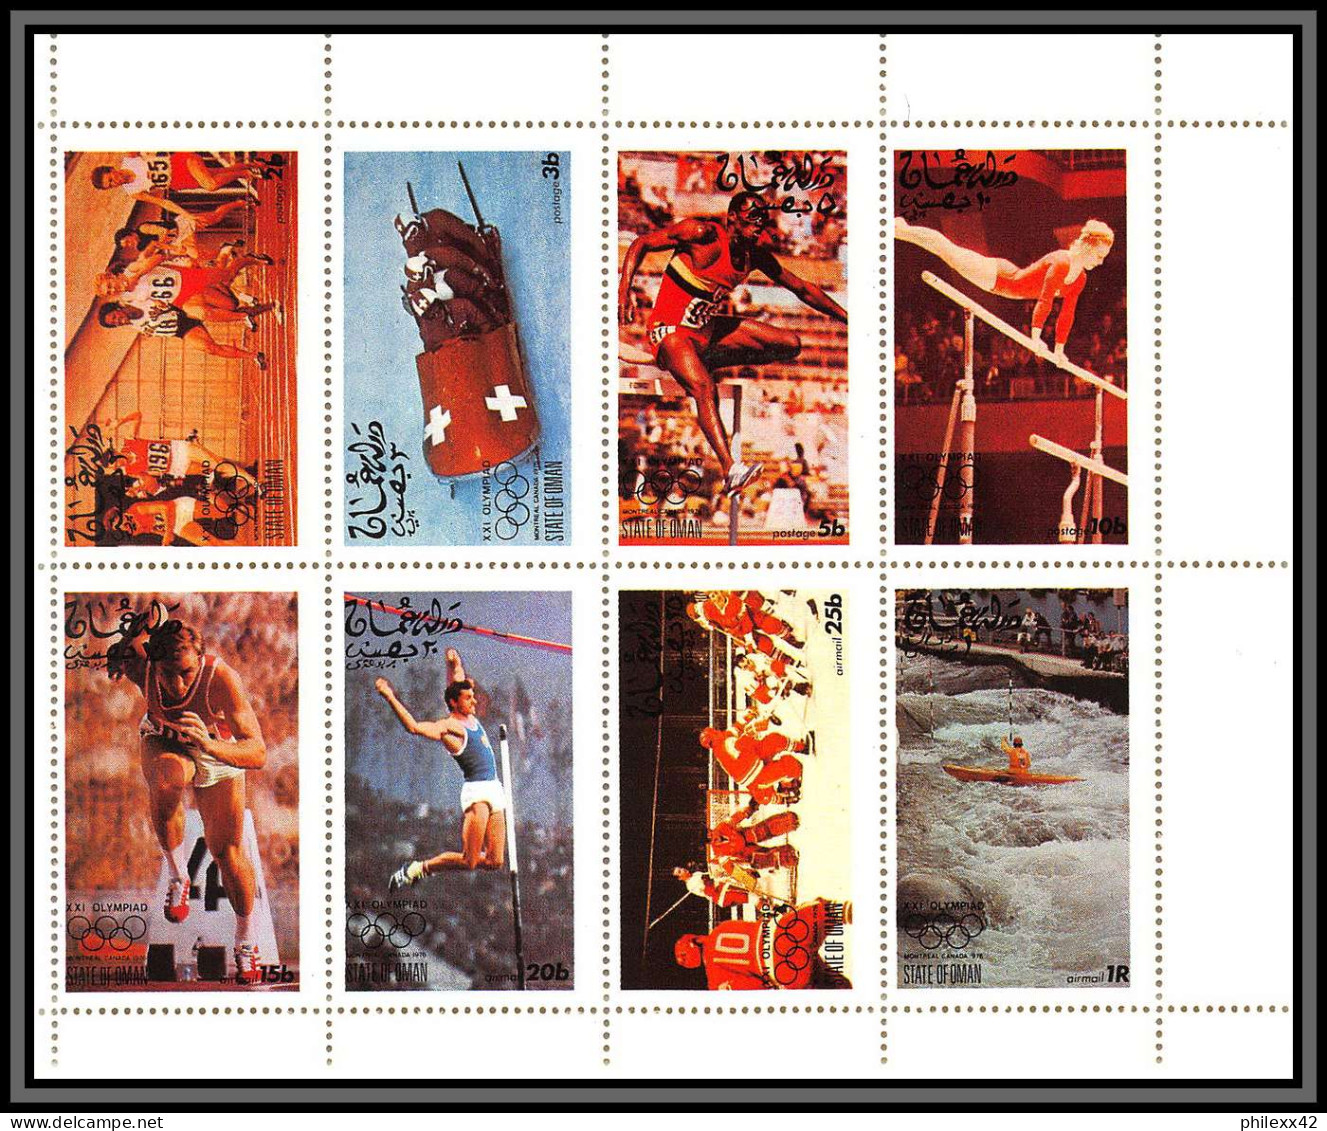 81665 Oman Bloc + Série Montreal Innsbruck 1976 Jeux Olympiques (olympic Games) ** MNH Hockey  - Winter 1976: Innsbruck